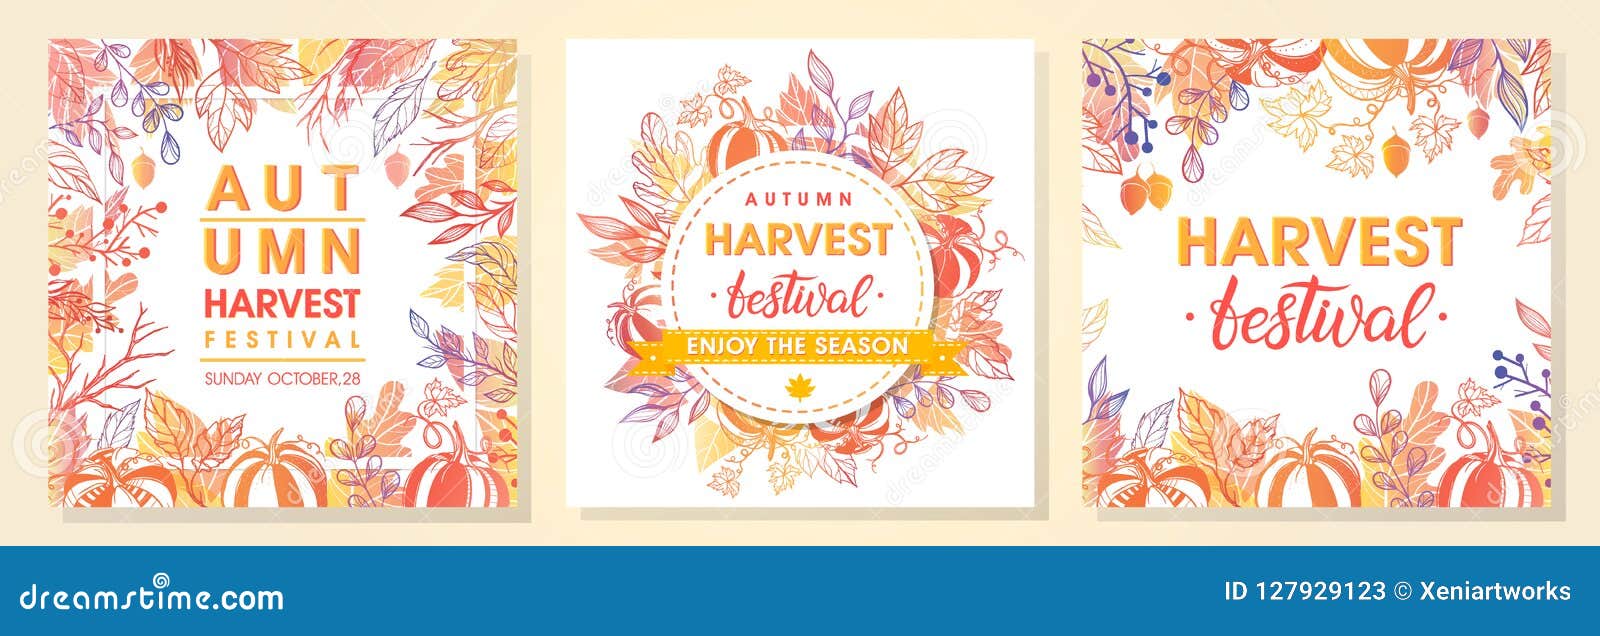 autumn harvest festival postes